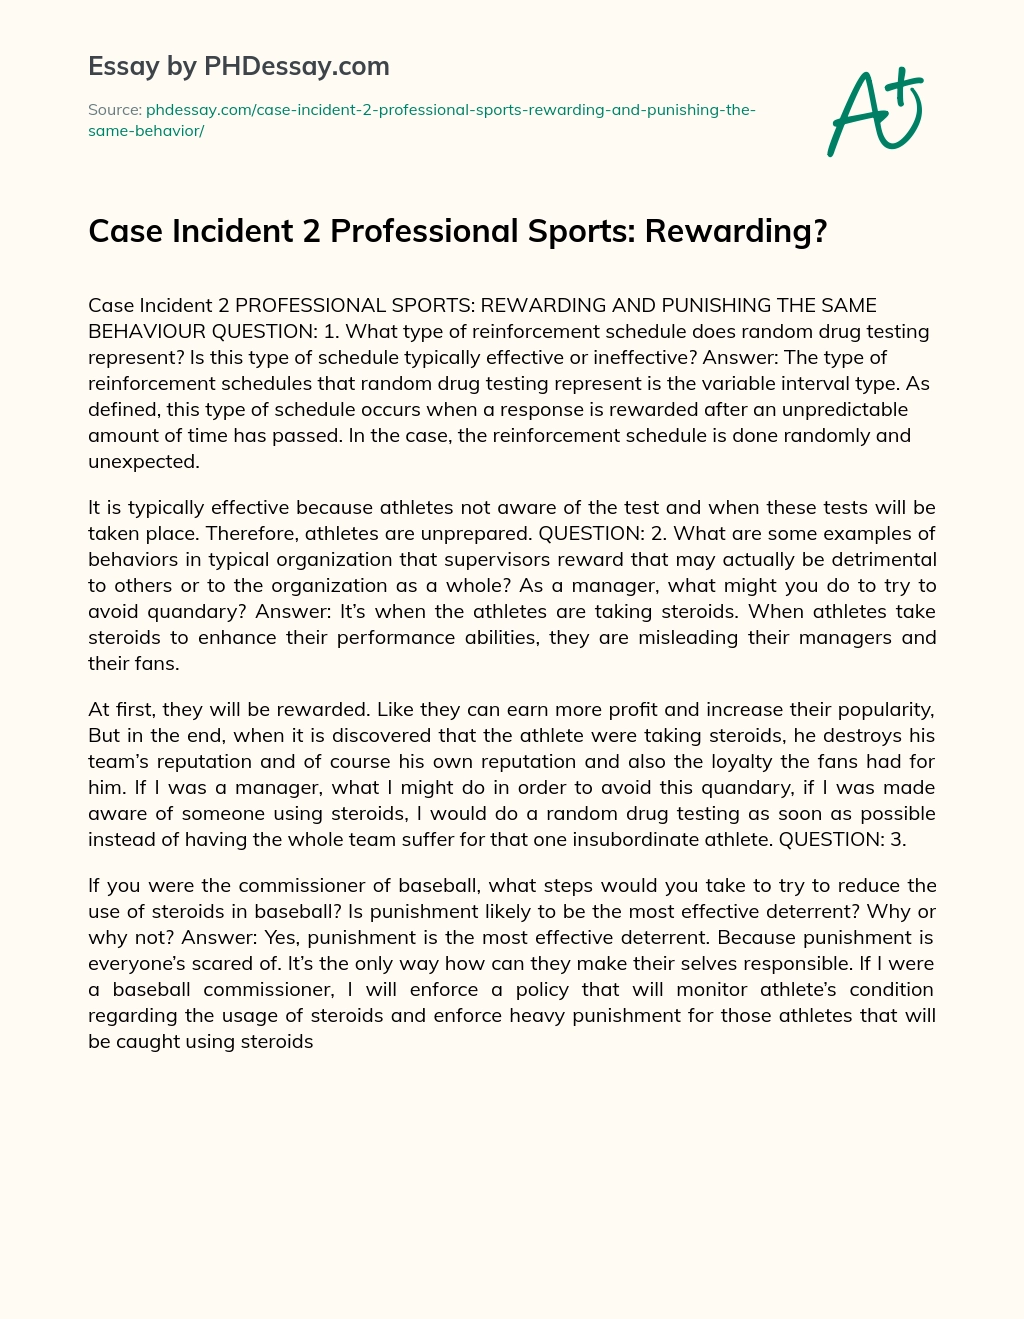 Case Incident 2 Professional Sports: Rewarding? essay